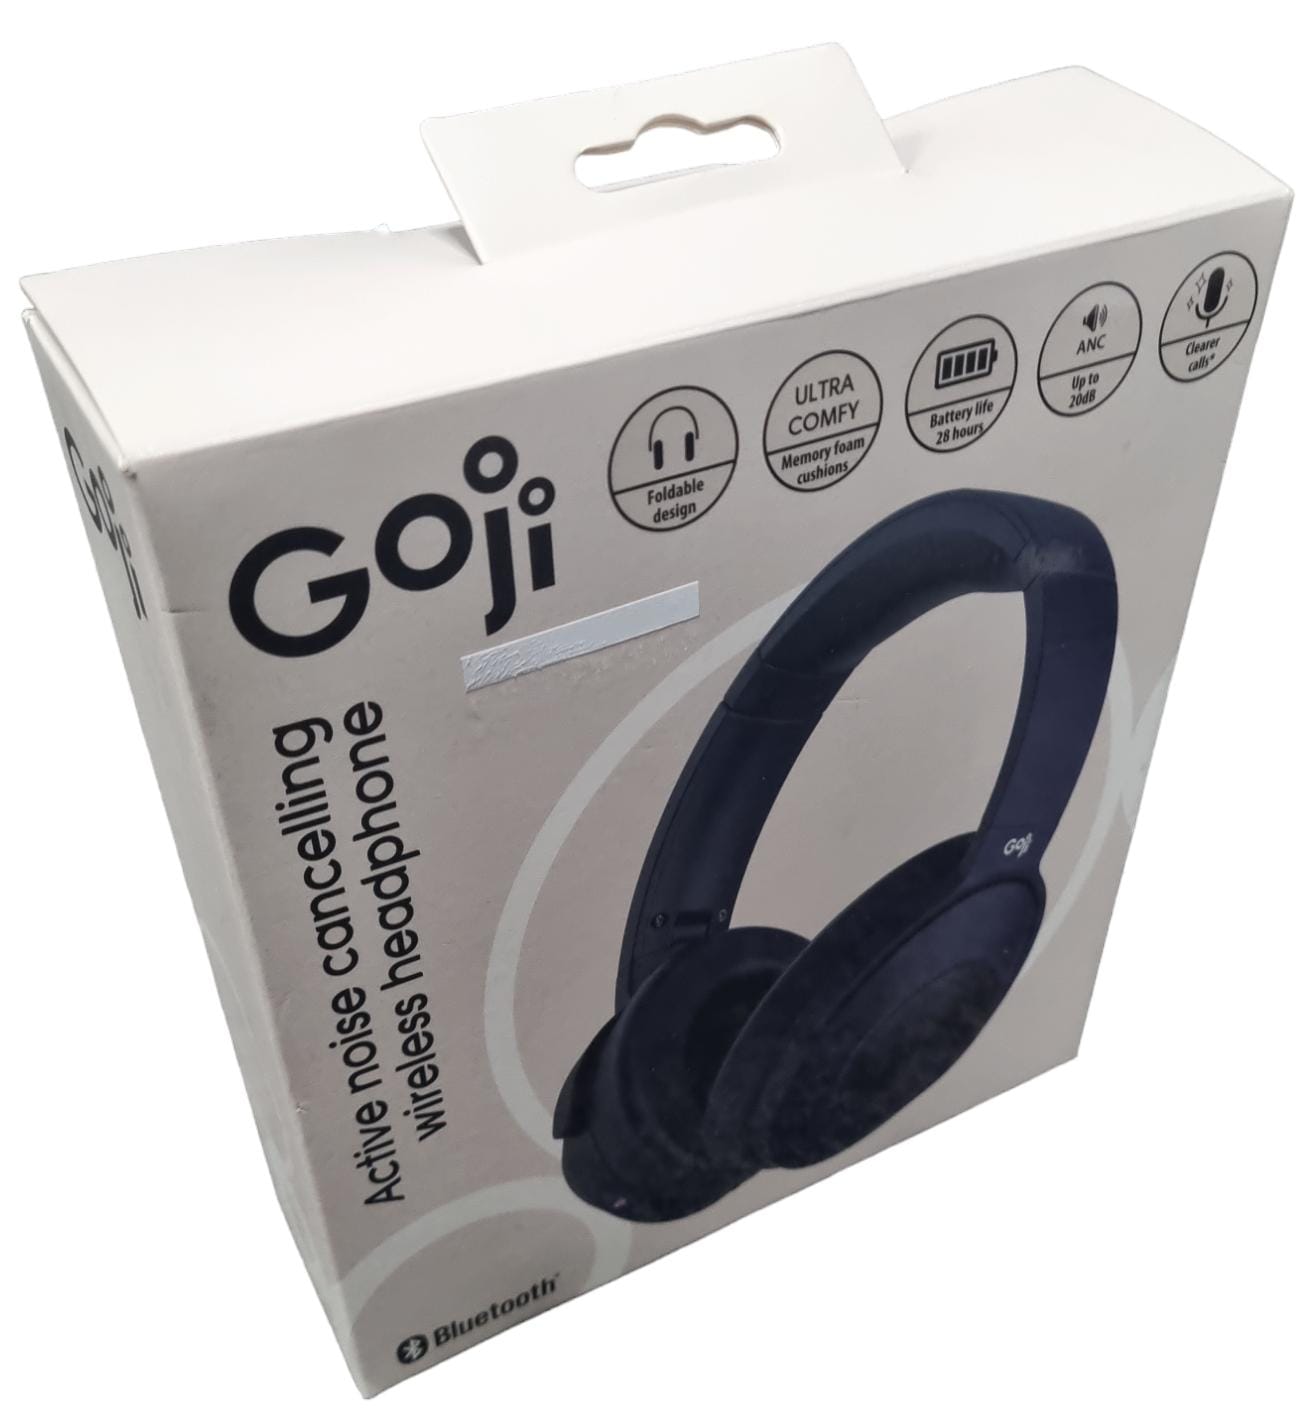 Goji Wireless Headphones - Active Noise Cancellation - New